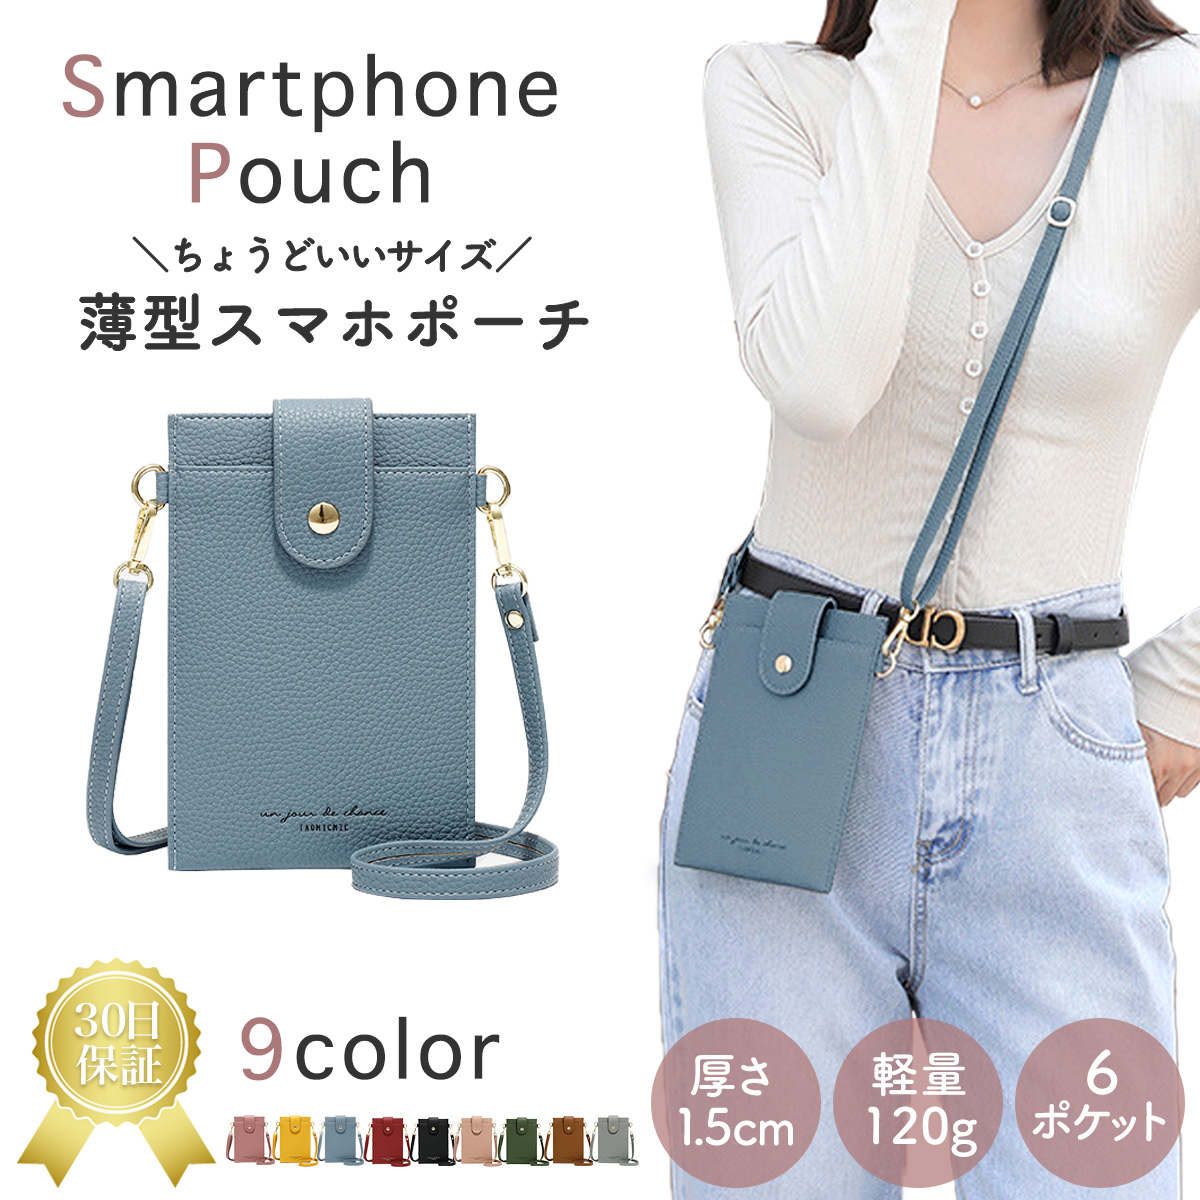  смартфон плечо кошелек имеется кошелек смартфон сумка на плечо кожа смартфон плечо сумка женский смартфон сумка смартфон плечо 